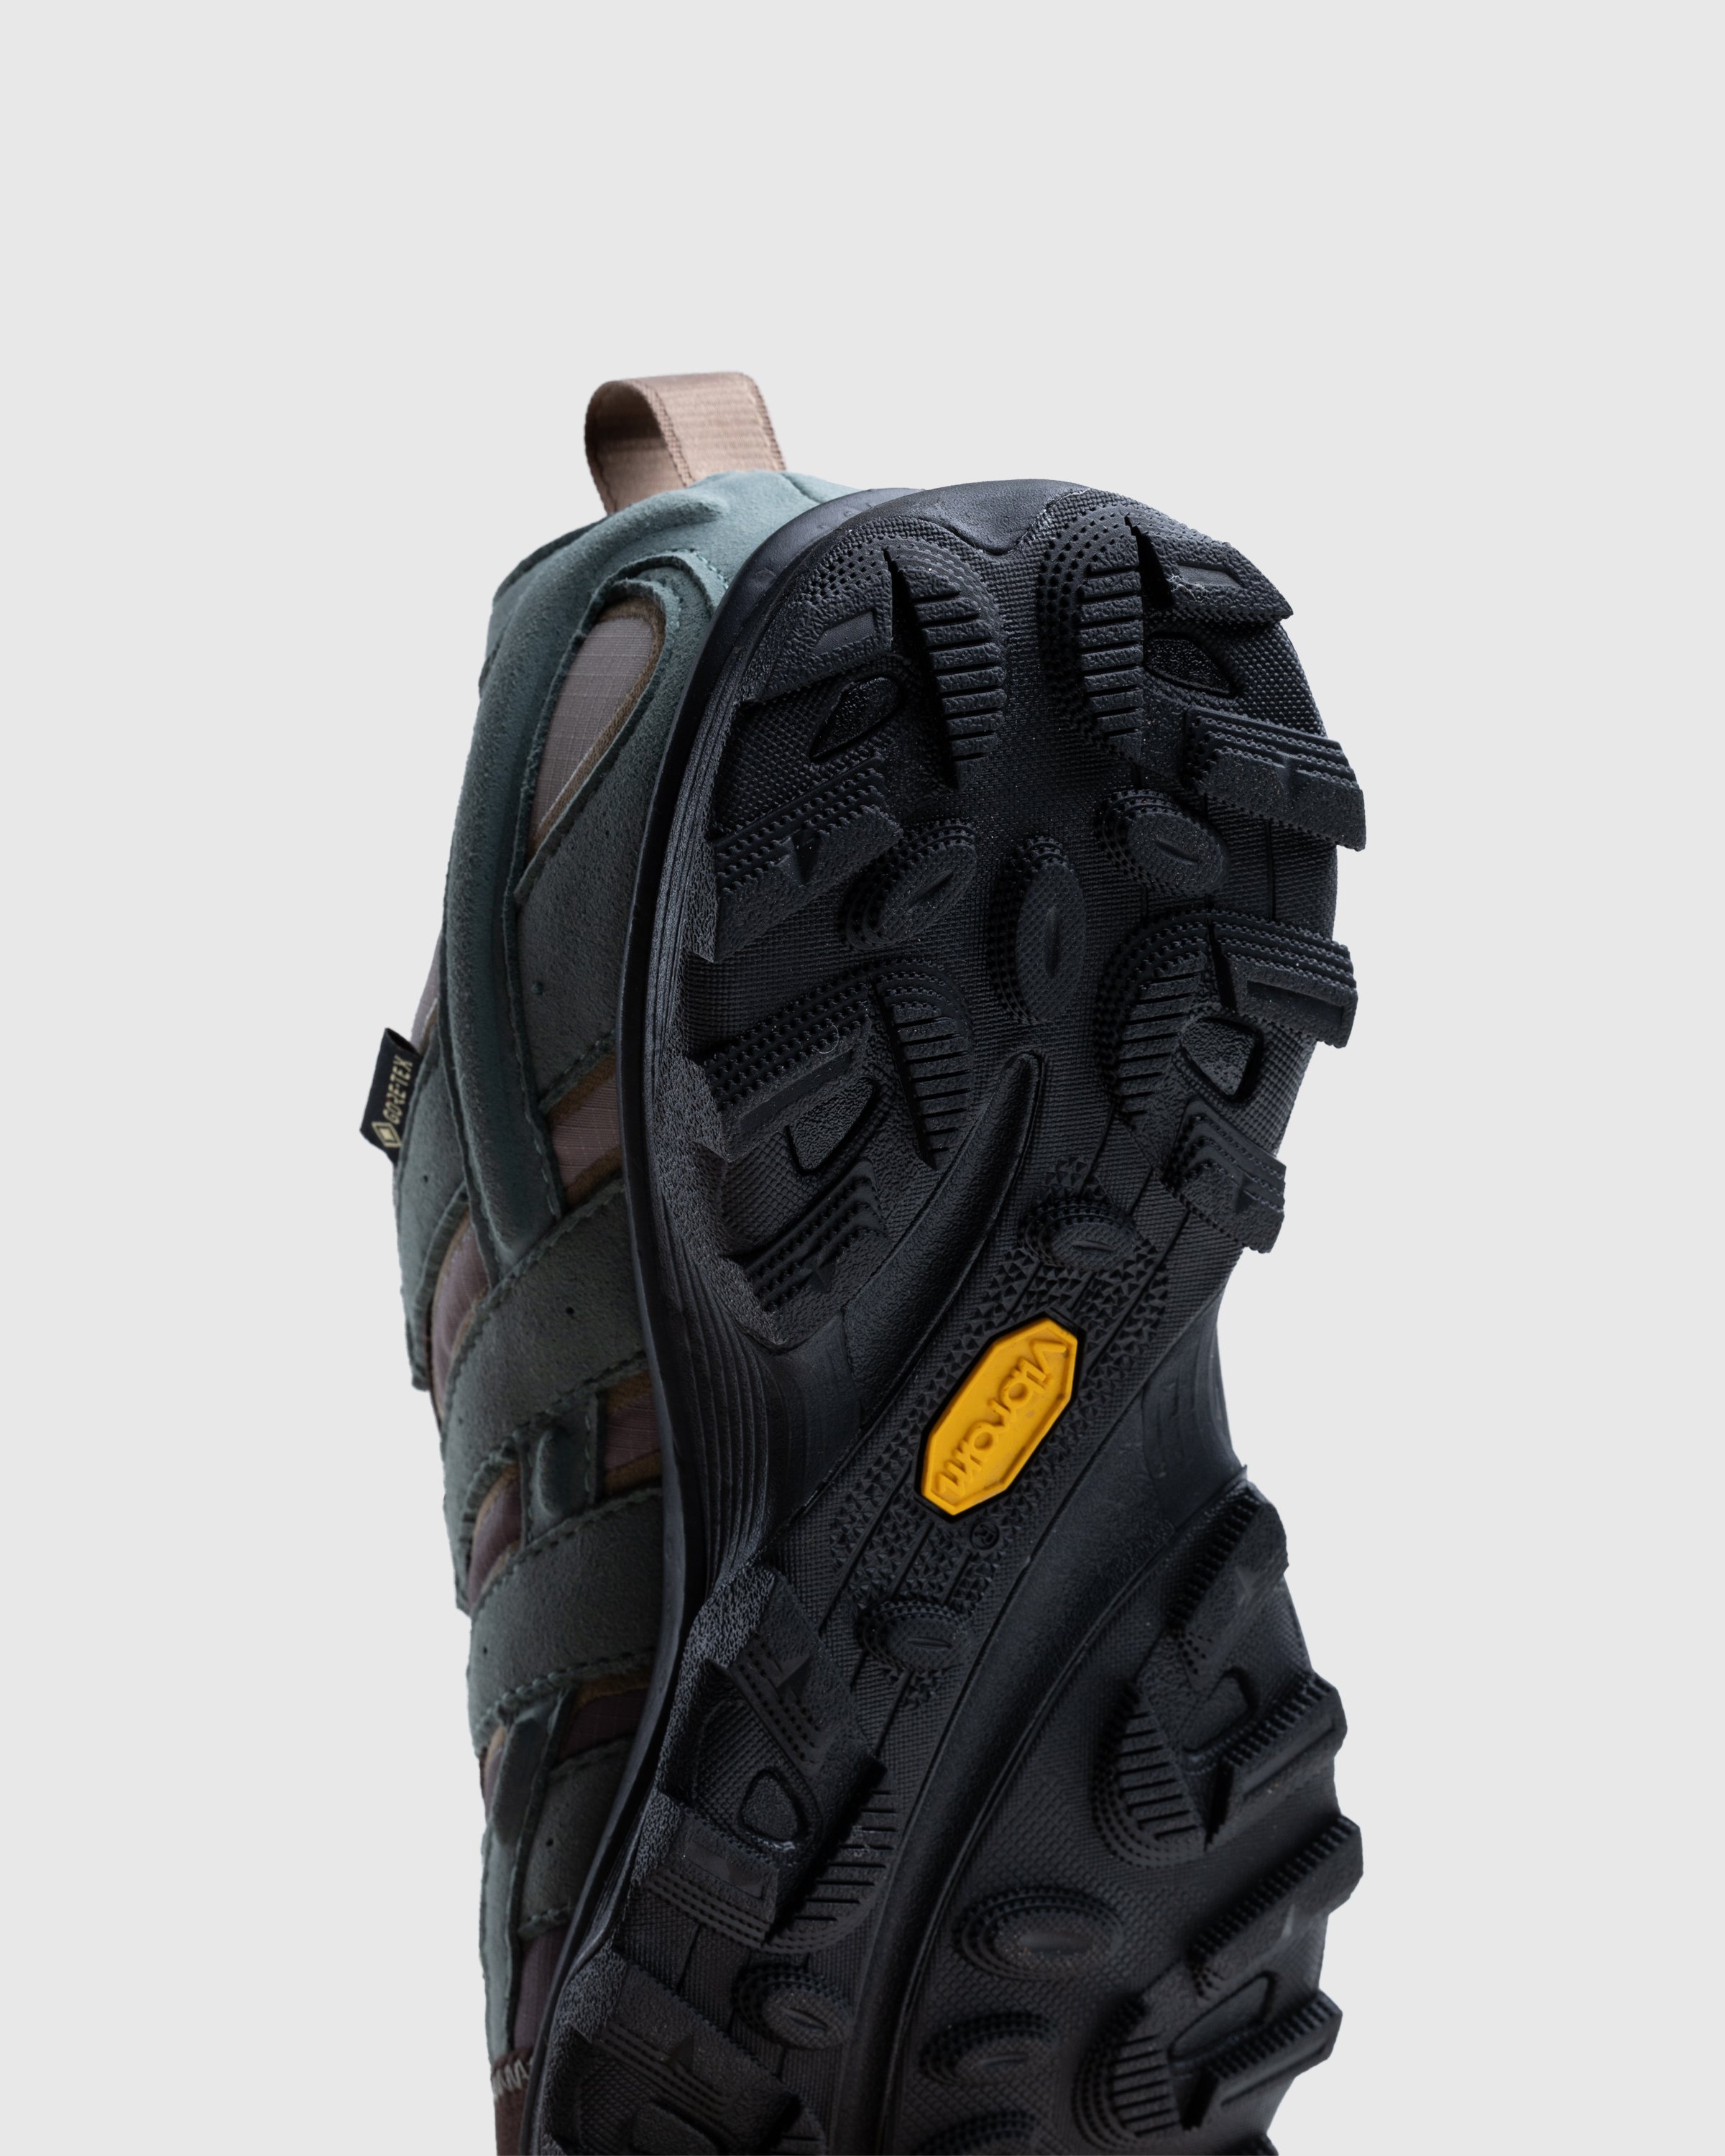 Merrell - Moab Speed Zip GORE-TEX Forest/Espresso - Footwear - Multi - Image 6